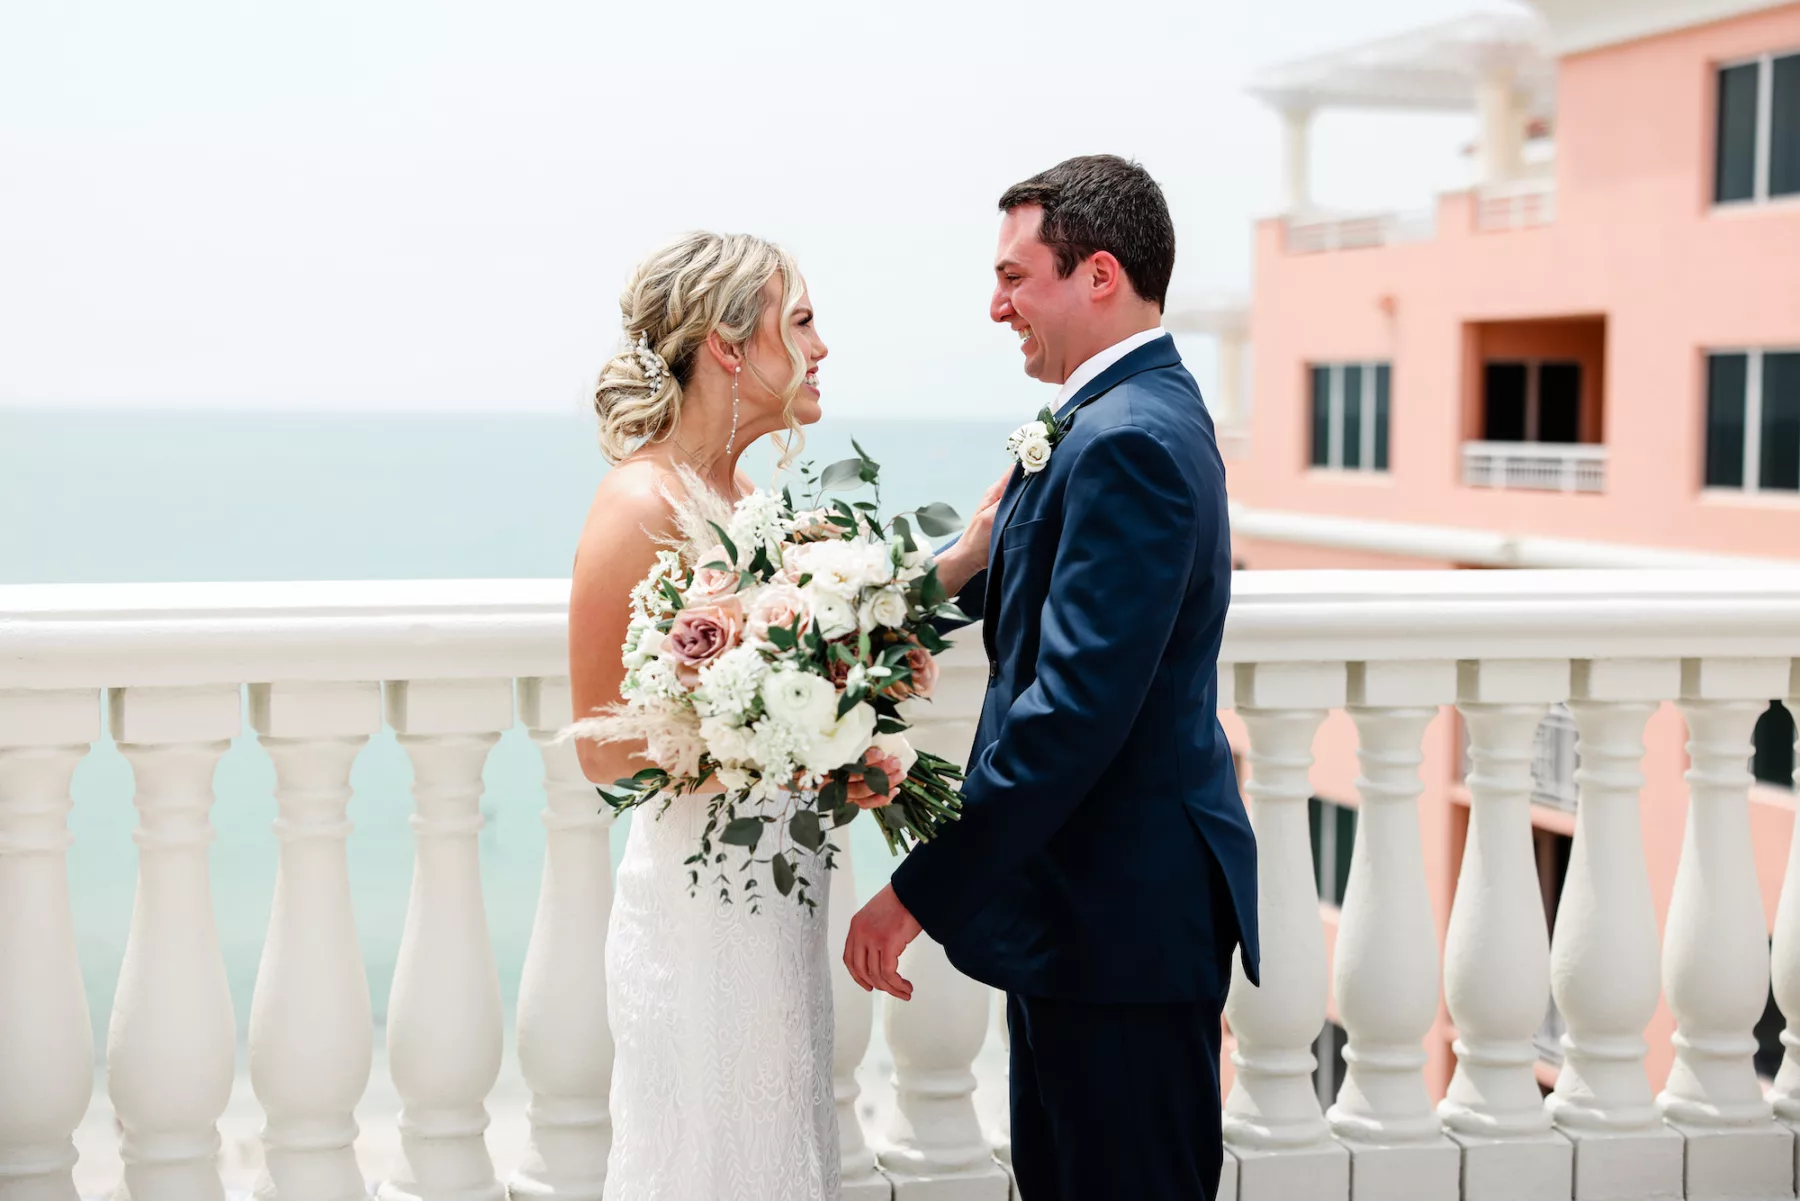 Bride and Groom First Look Wedding Portrait | Tampa Bay Event Venue Hyatt Regency Clearwater Beach Resort and Spa | Photographer Lifelong Photography Studio